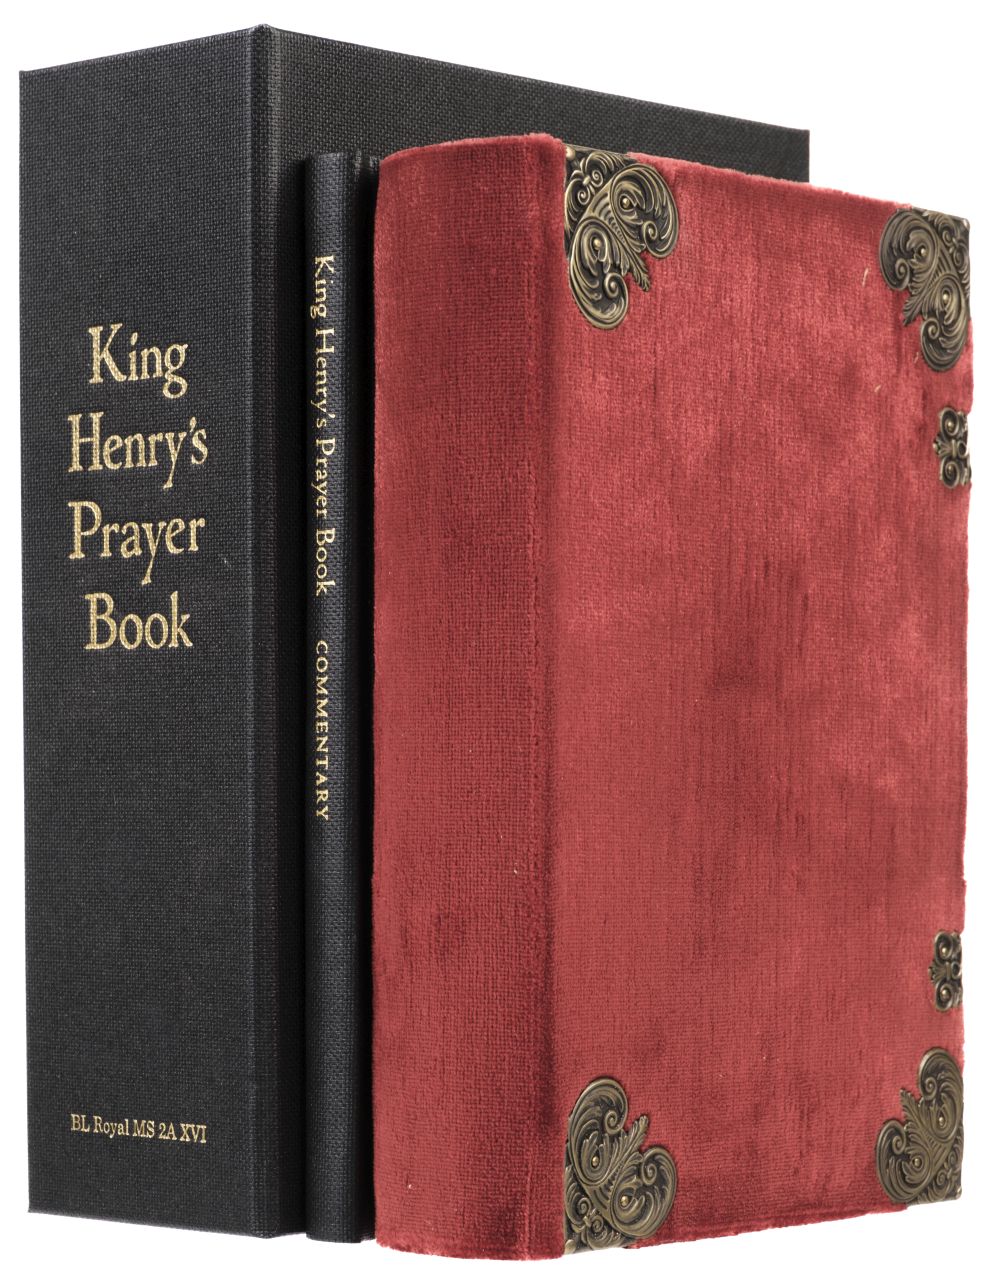 Carley (James P.). King Henry's Prayer Book, BL Royal MS 24 XVI, Folio Society, 2009